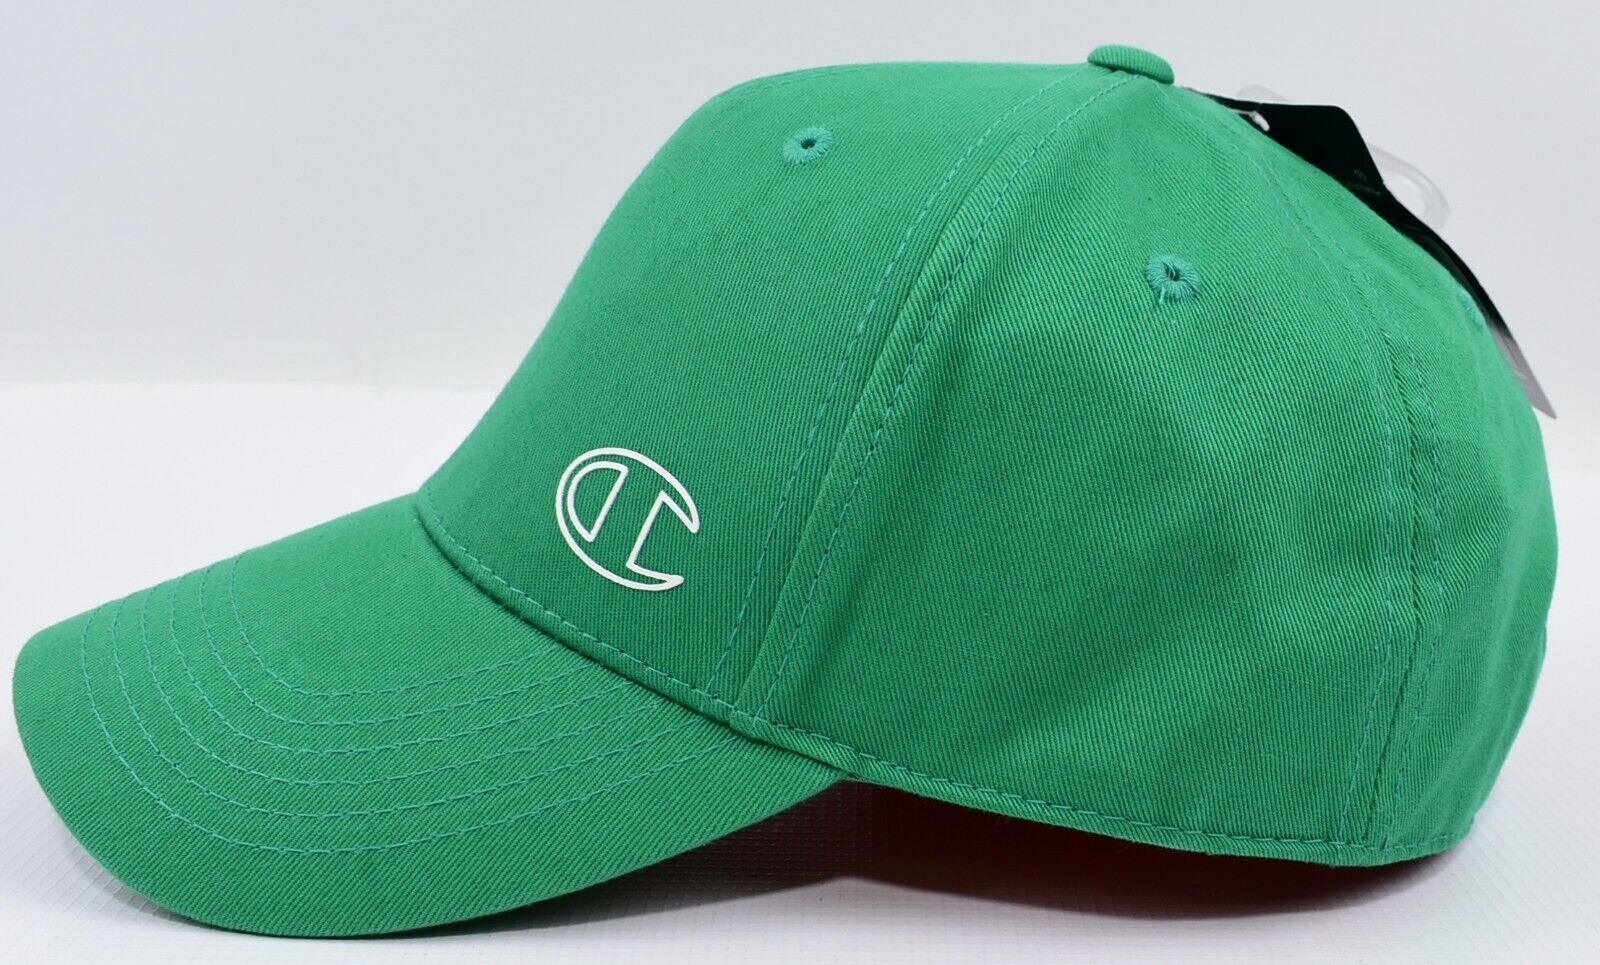 CHAMPION Kids' Logo Baseball Cap, Hat, GREEN, One Size Youth (Older Kids)